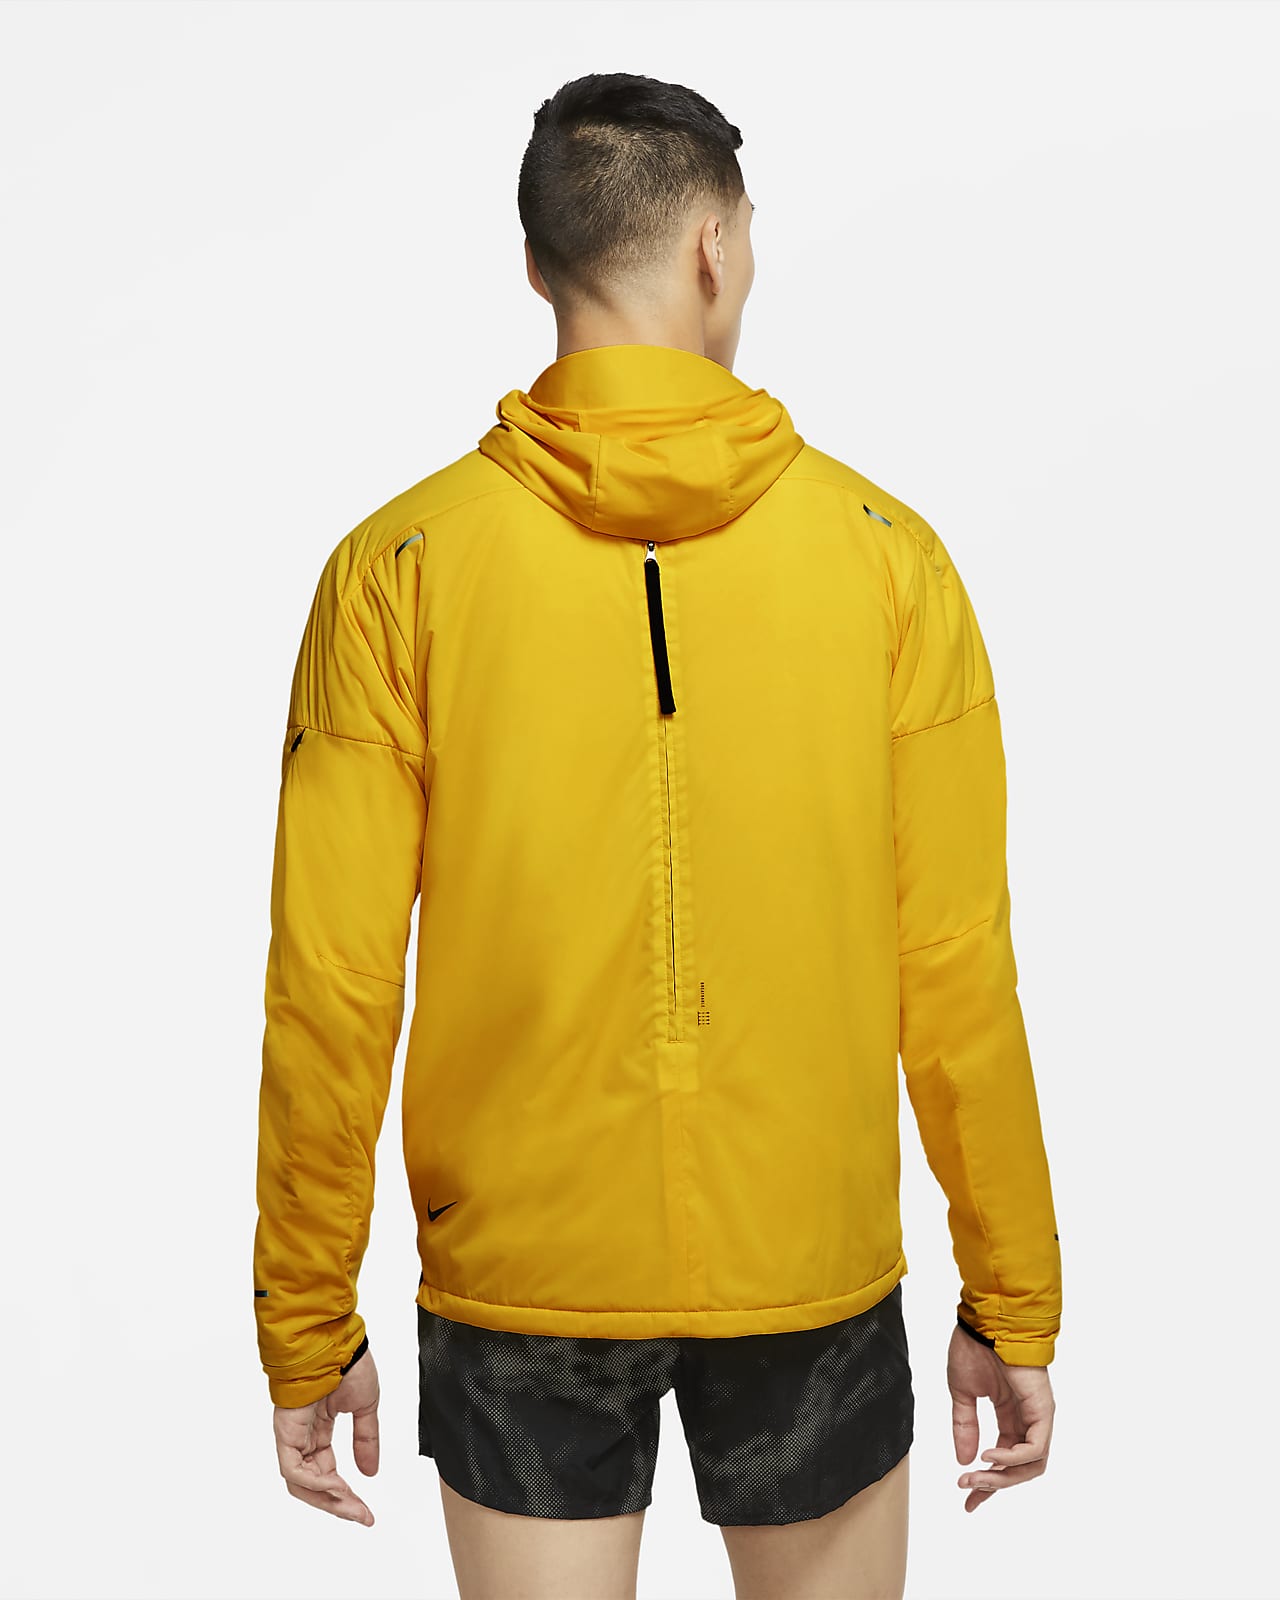 nike running jacket yellow